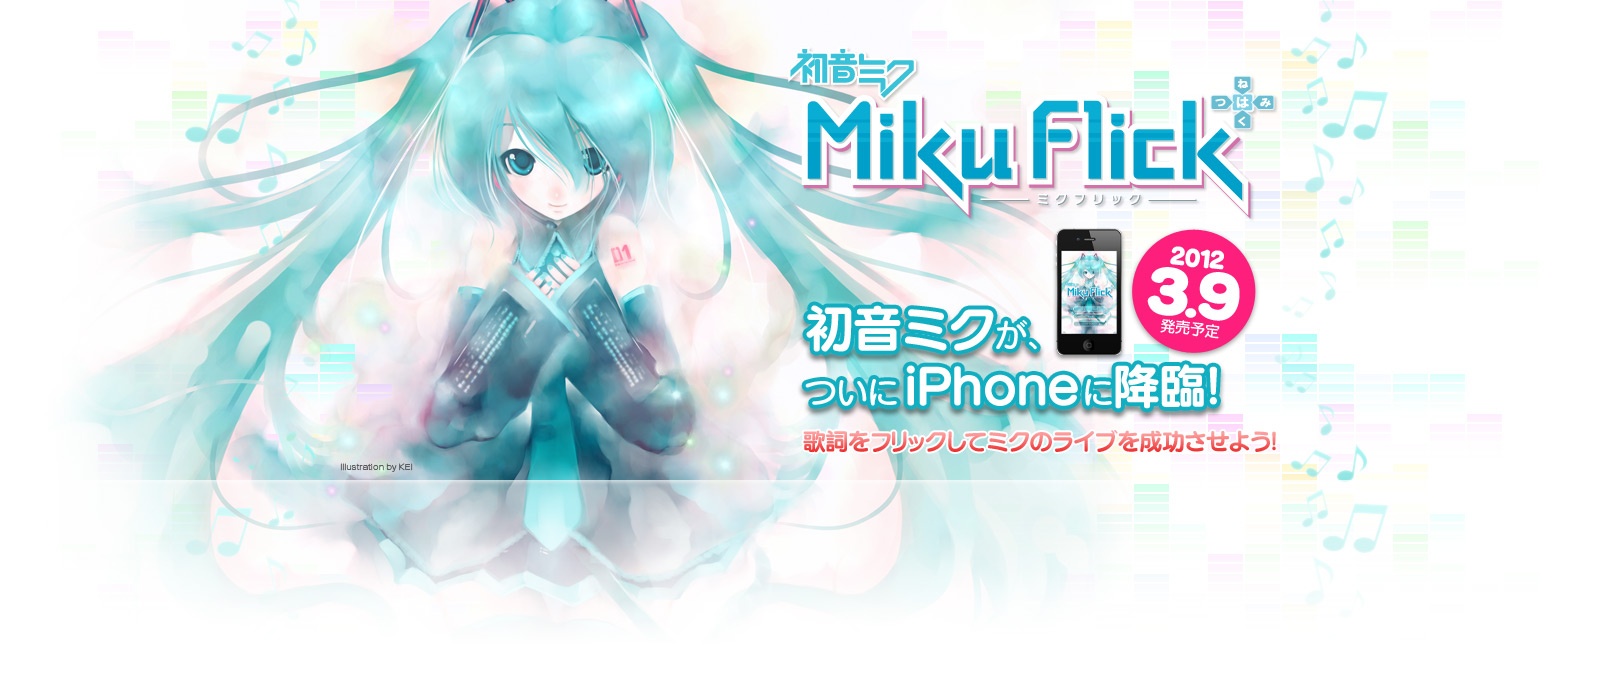 Miku flick 2 song pack download